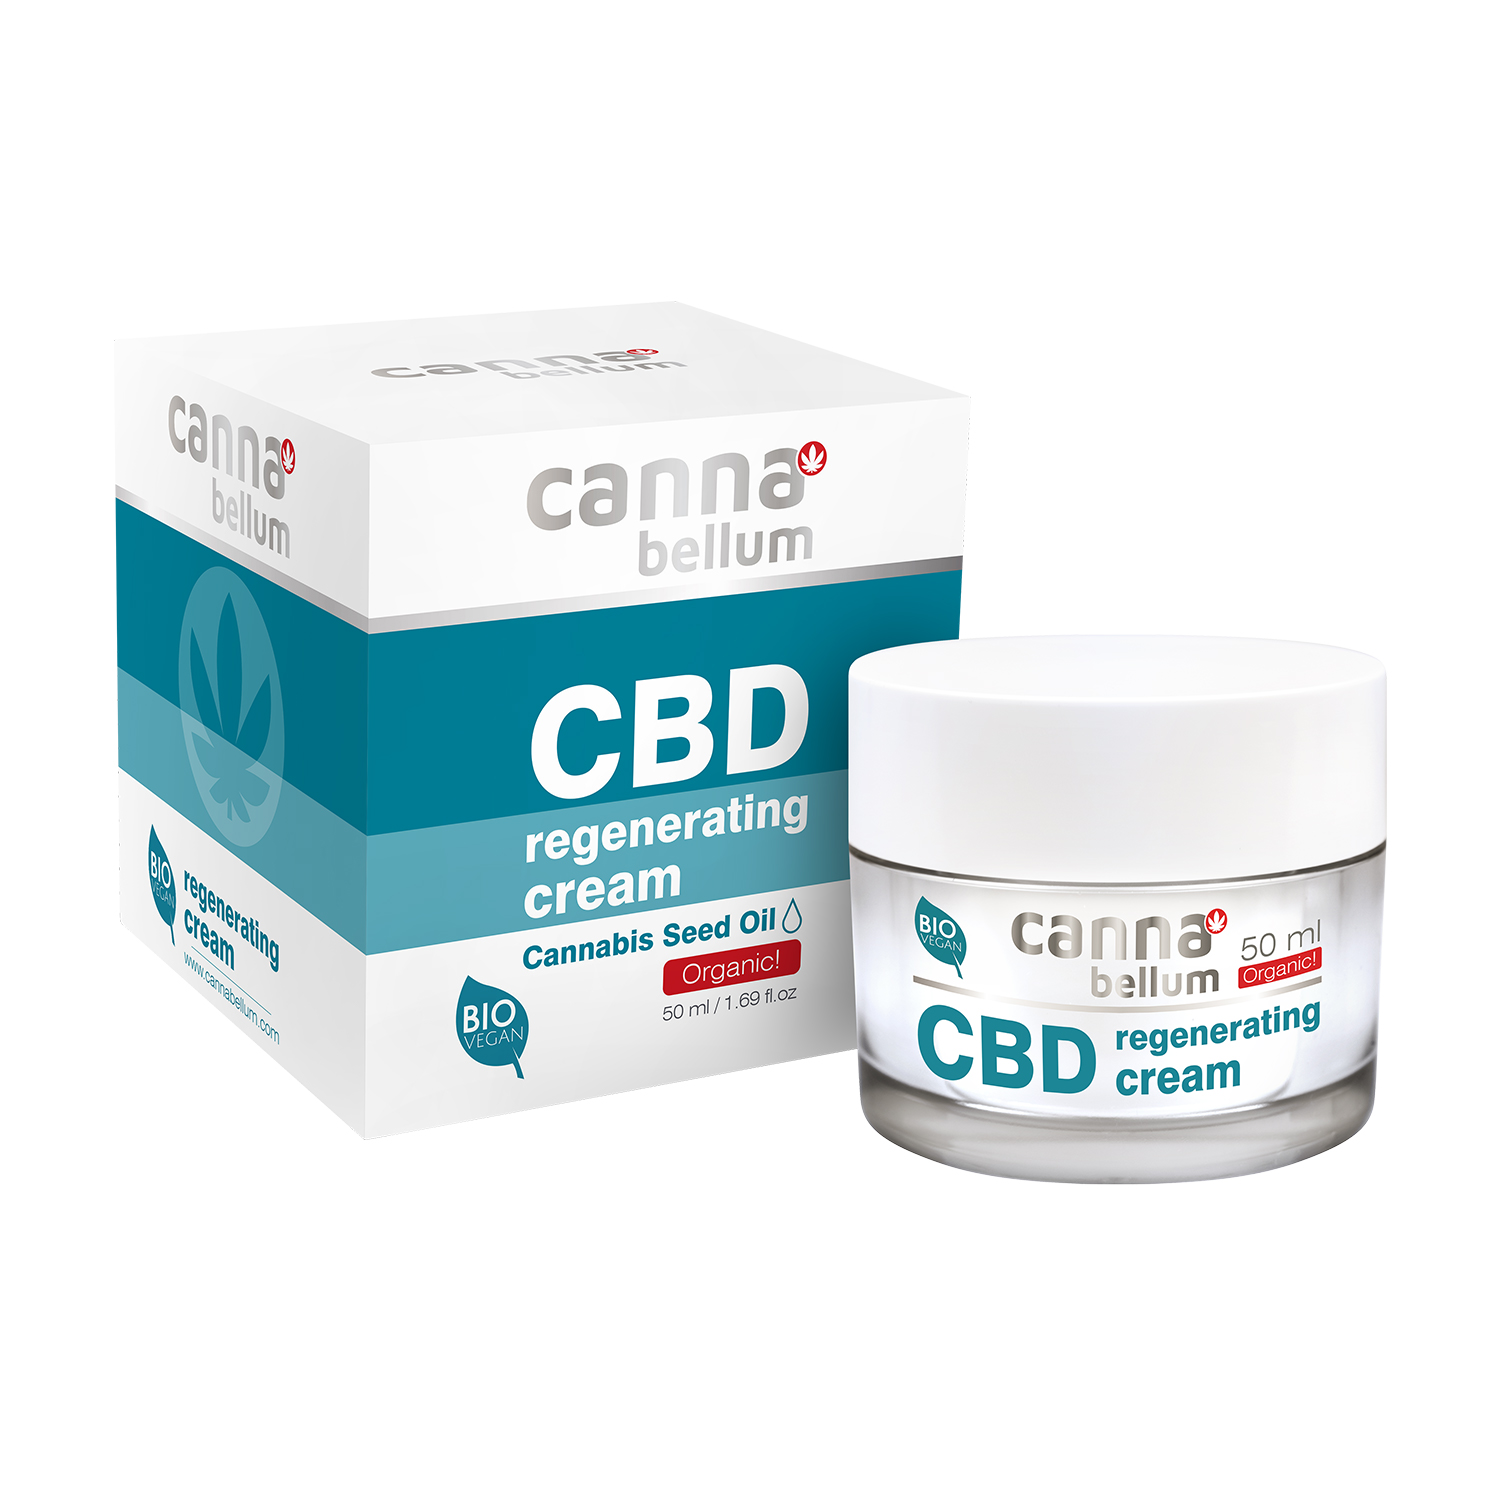 Cannabellum CBD regenerating cream 50ml P1253 komplet WEB 38